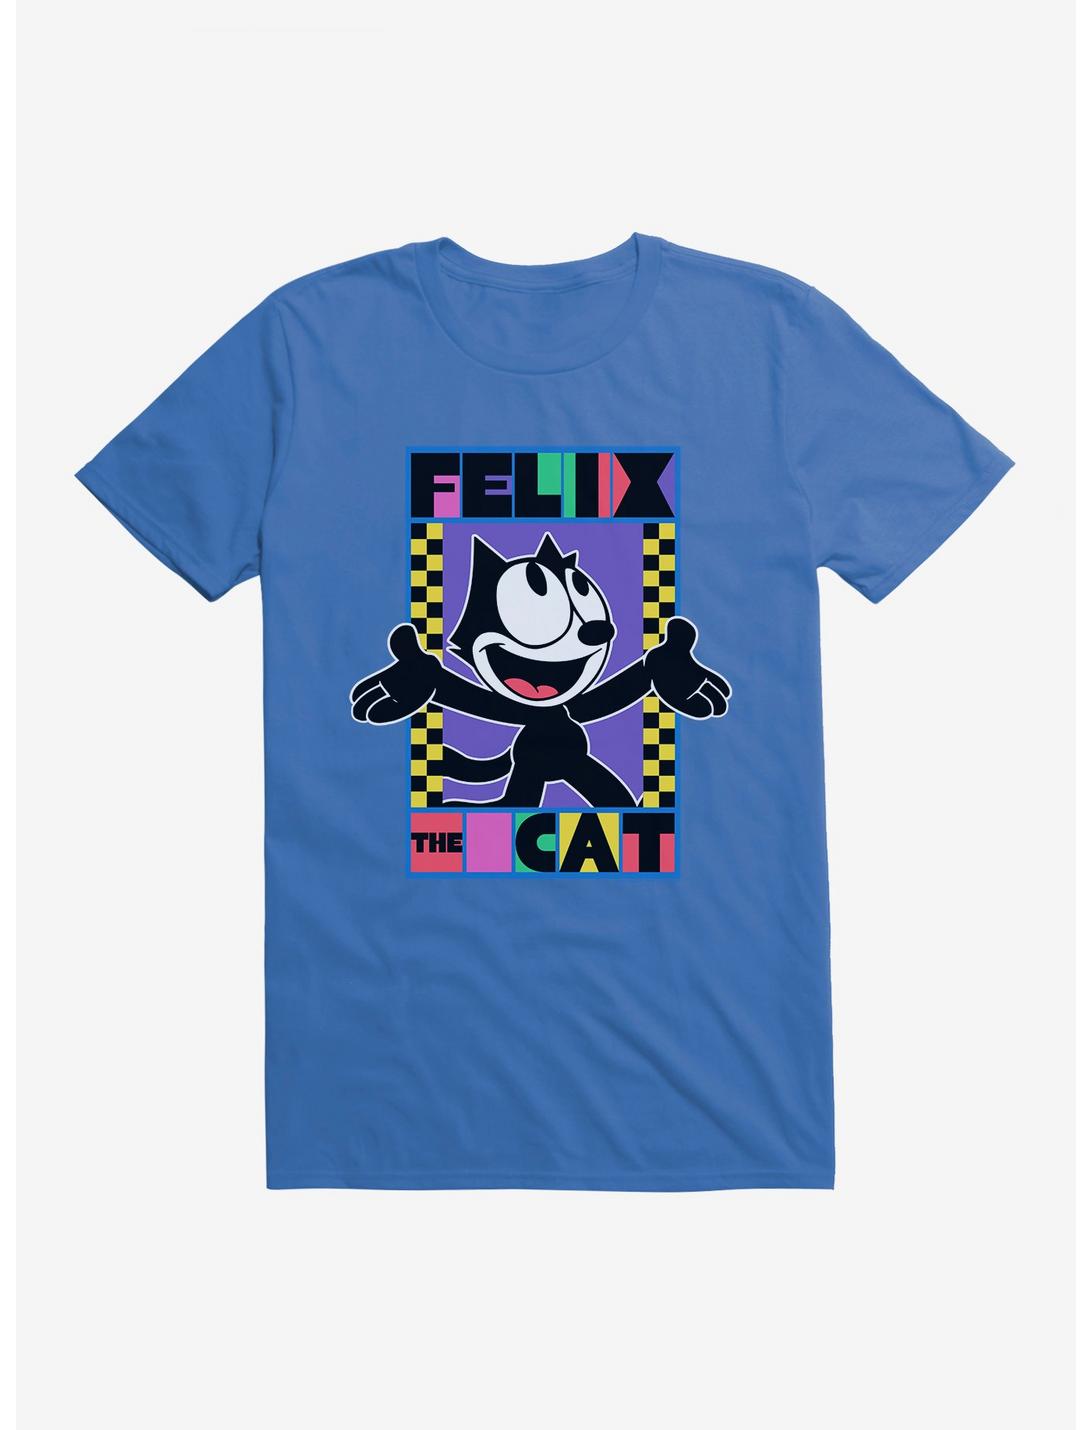 Felix The Cat 90s Checkers Graphic T-Shirt, ROYAL BLUE, hi-res